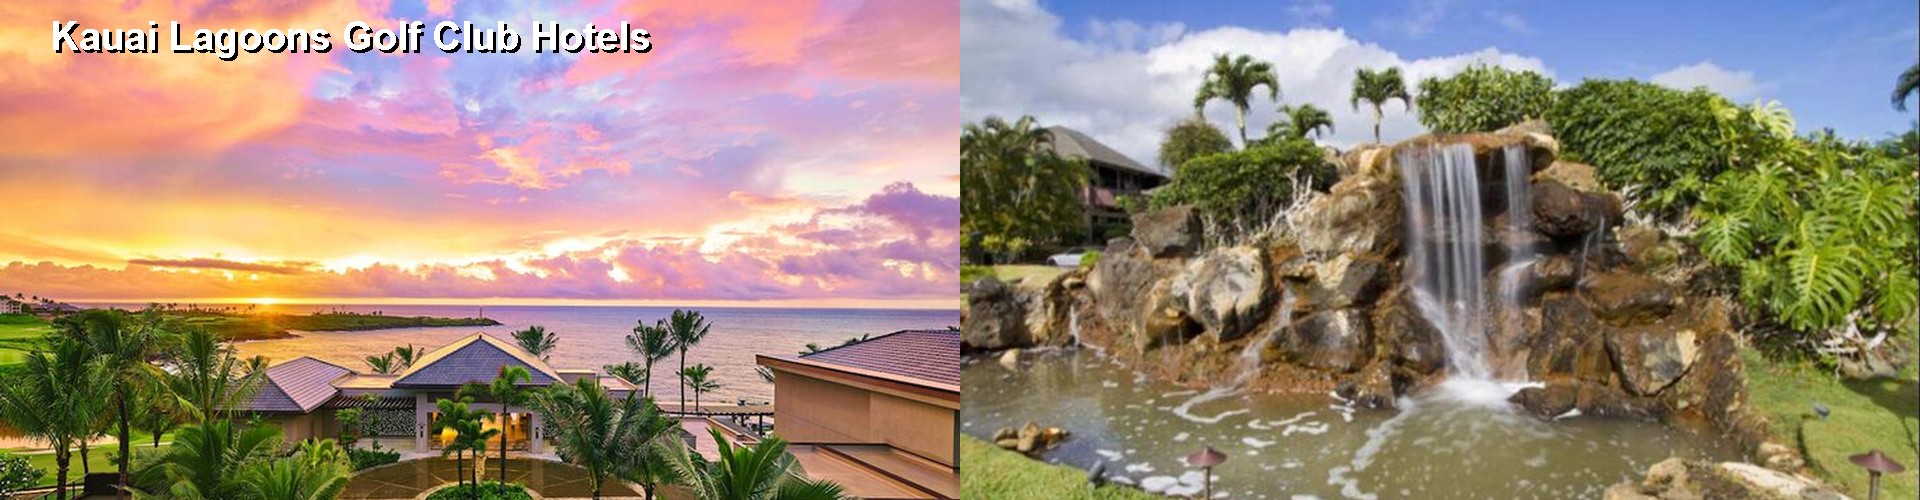 5 Best Hotels near Kauai Lagoons Golf Club